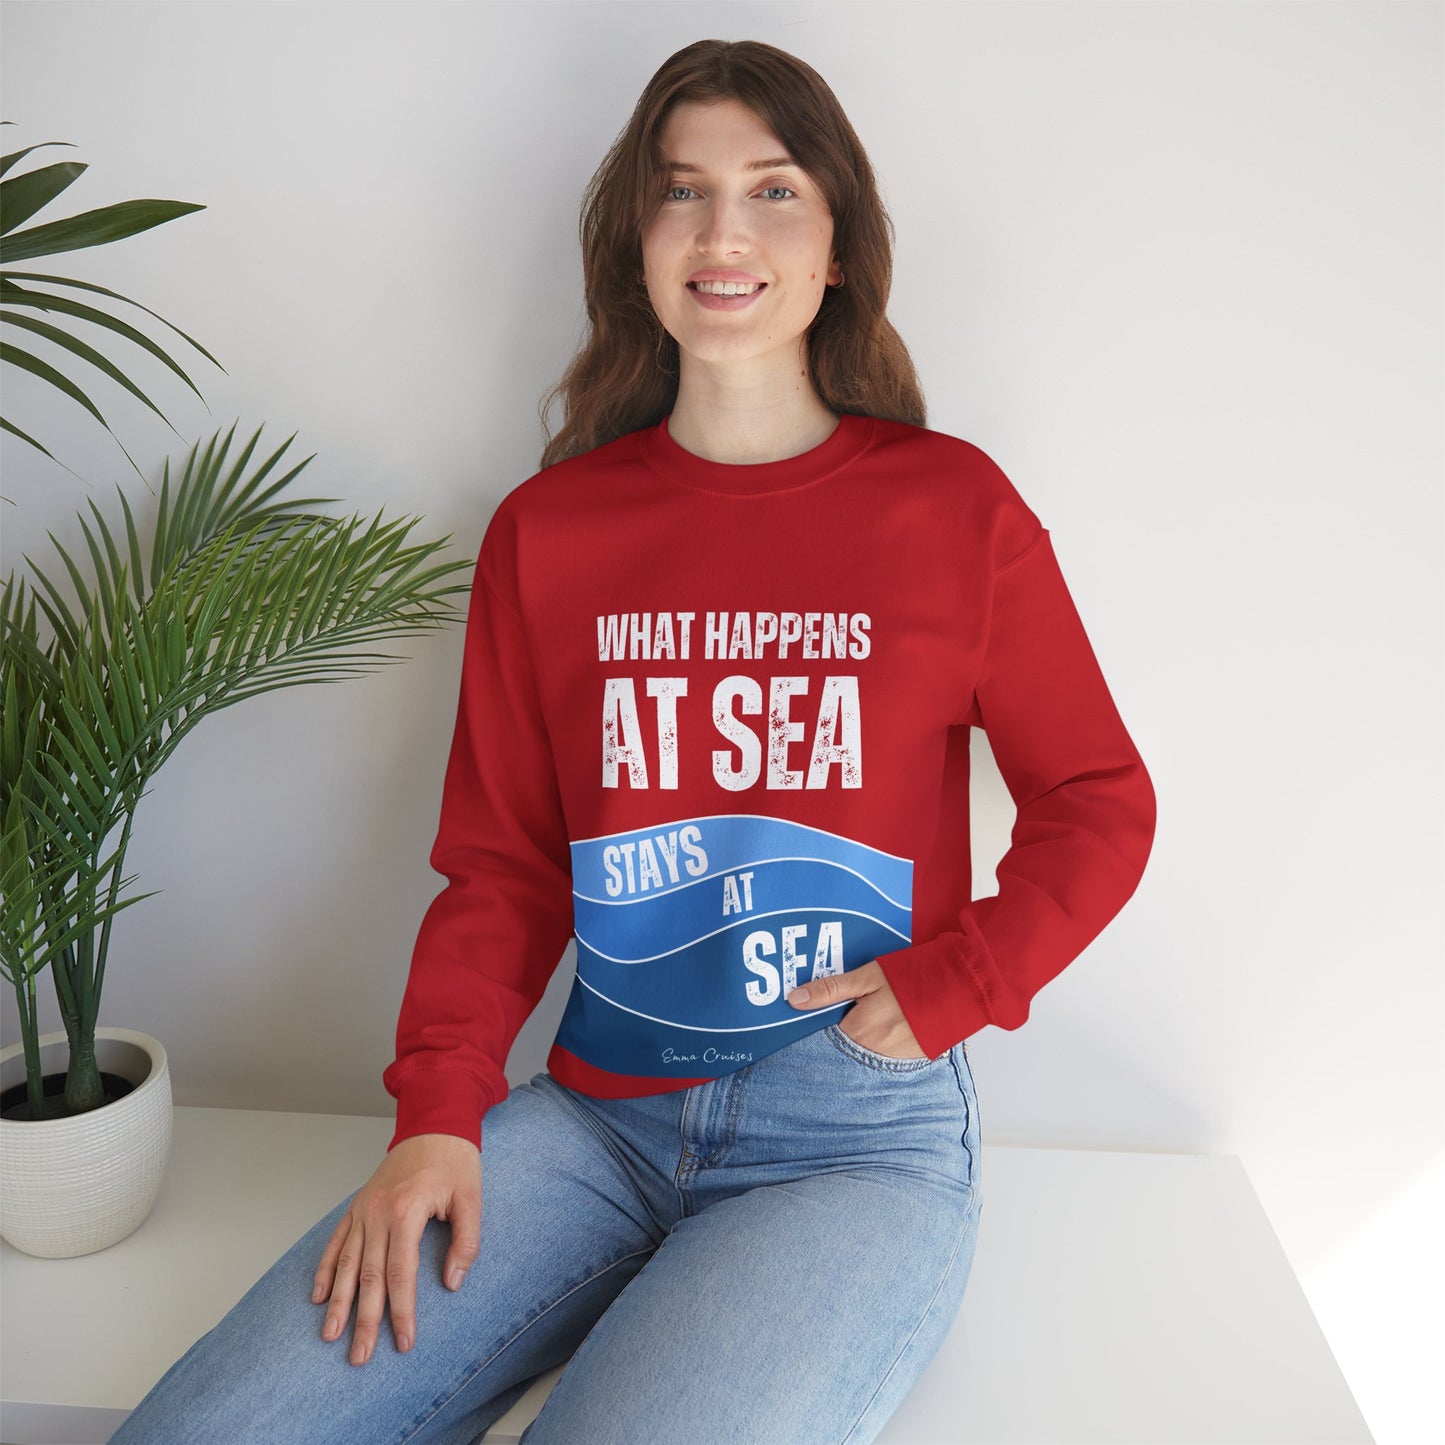 What Happens at Sea - UNISEX Crewneck Sweatshirt